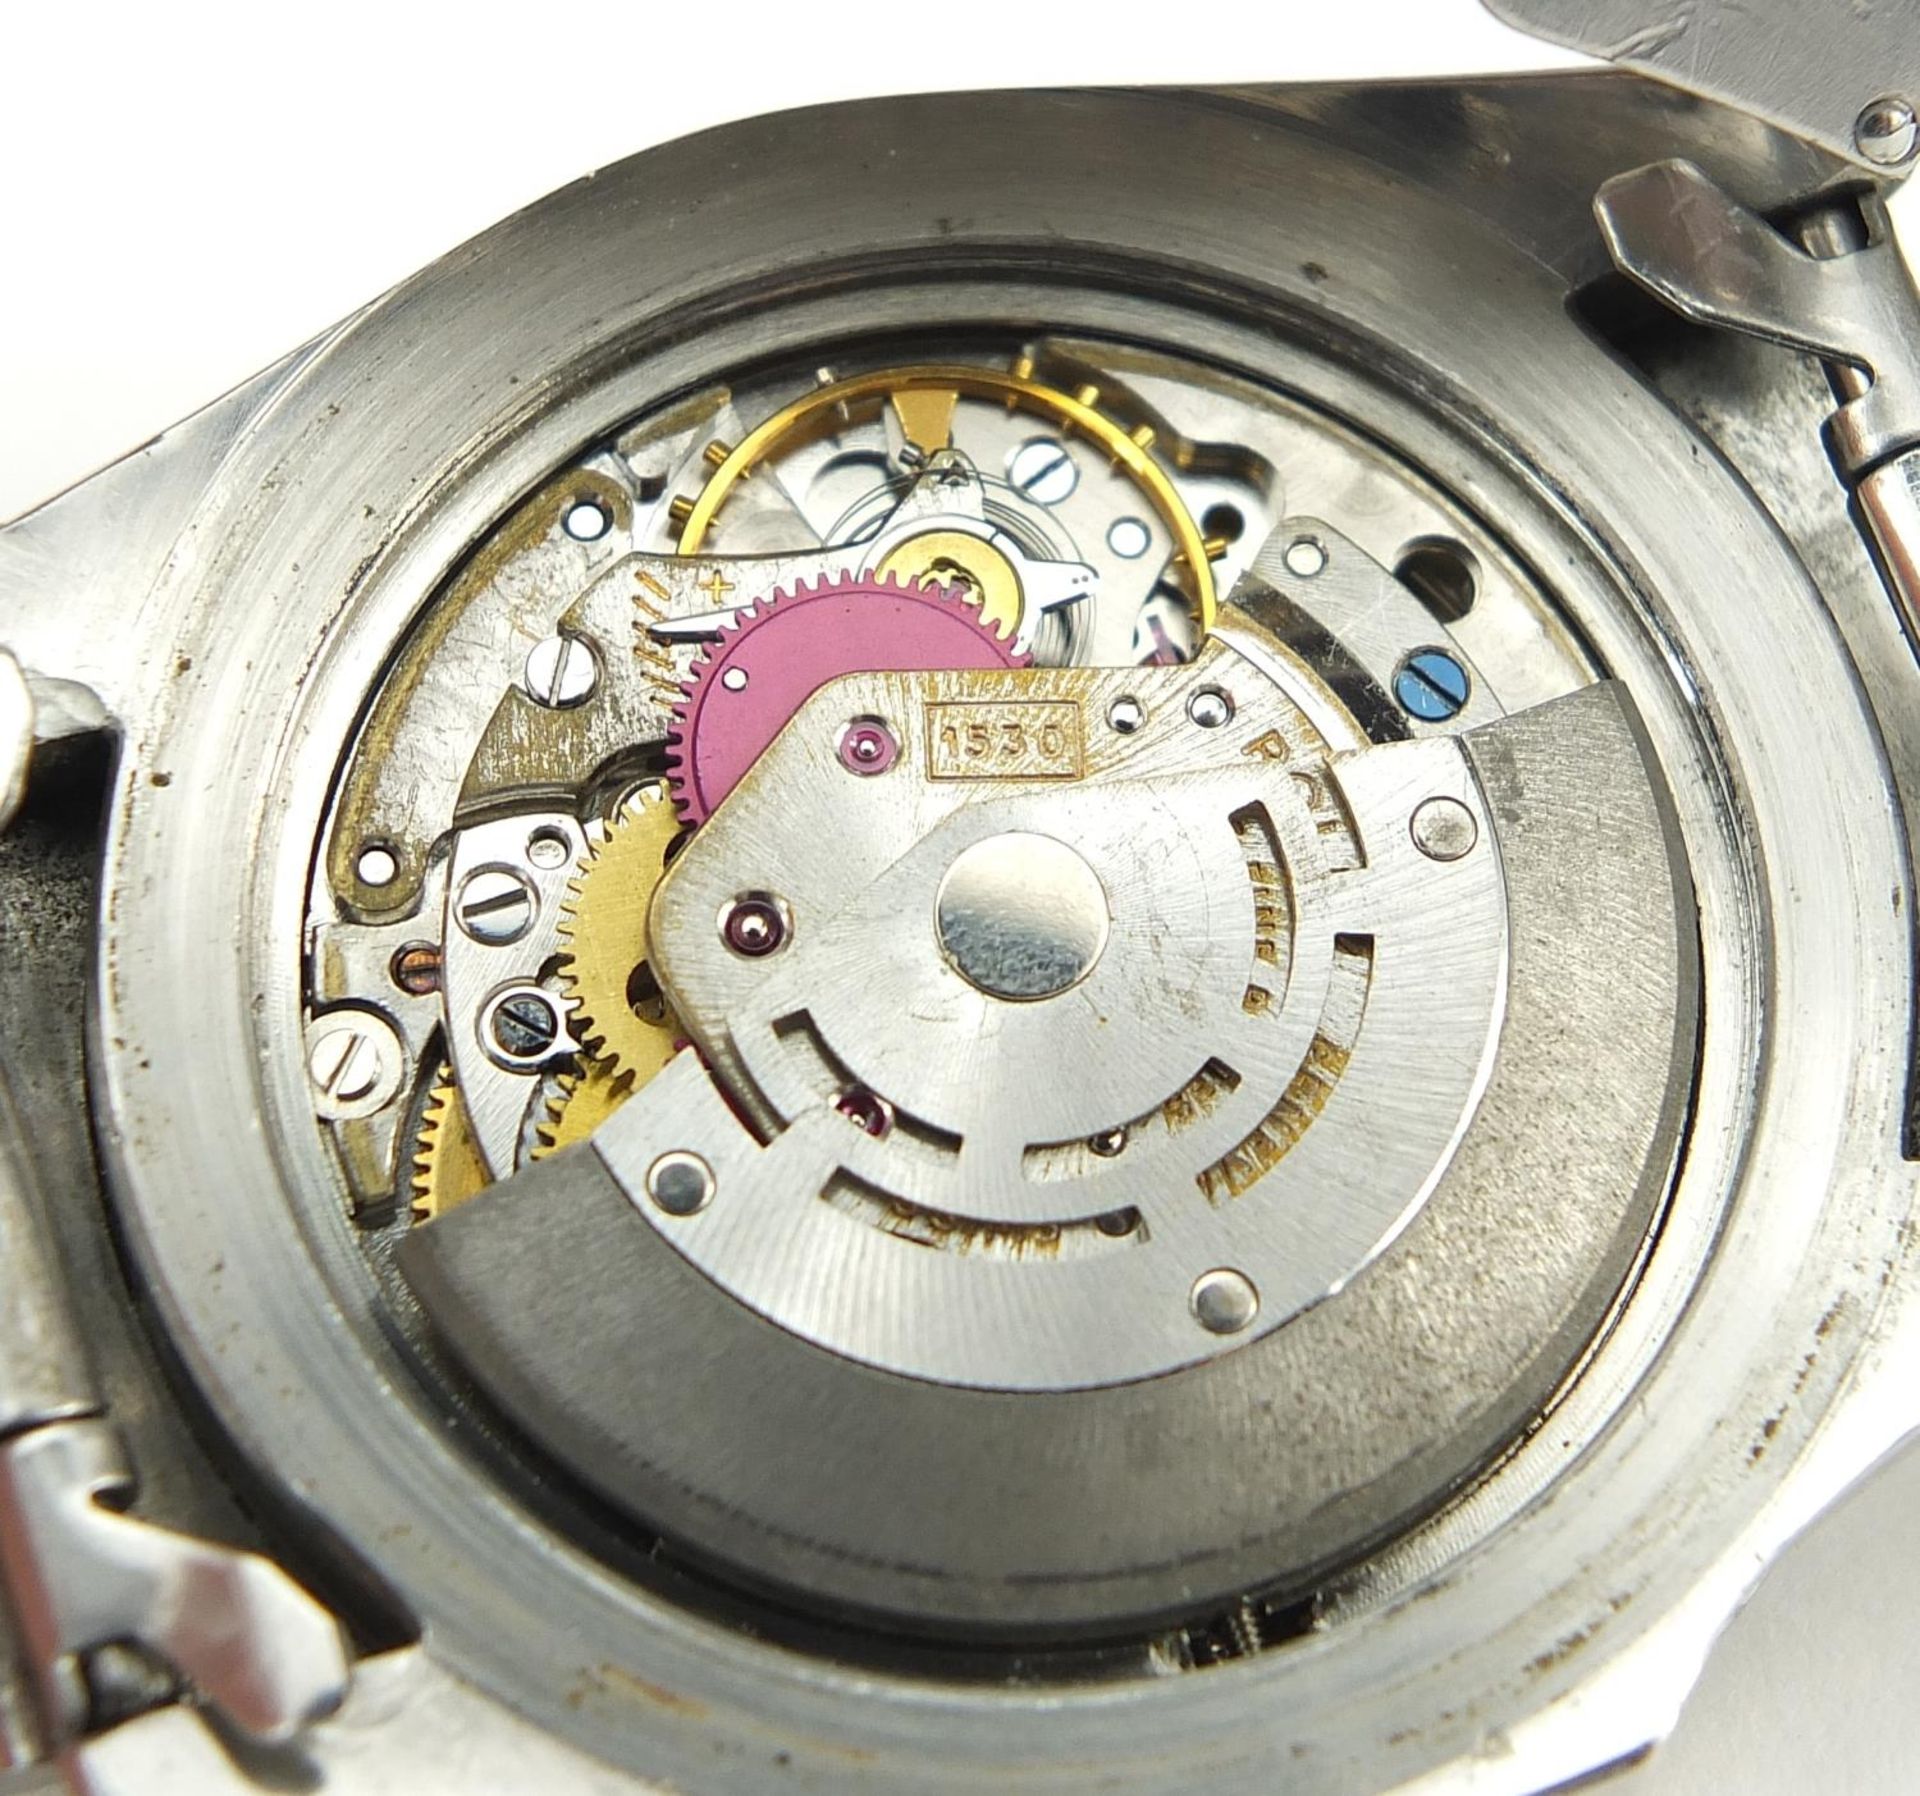 Rolex gentlemen's Submariner automatic wristwatch, ref 5513, serial number 1005684, 40mm in diameter - Image 8 of 9